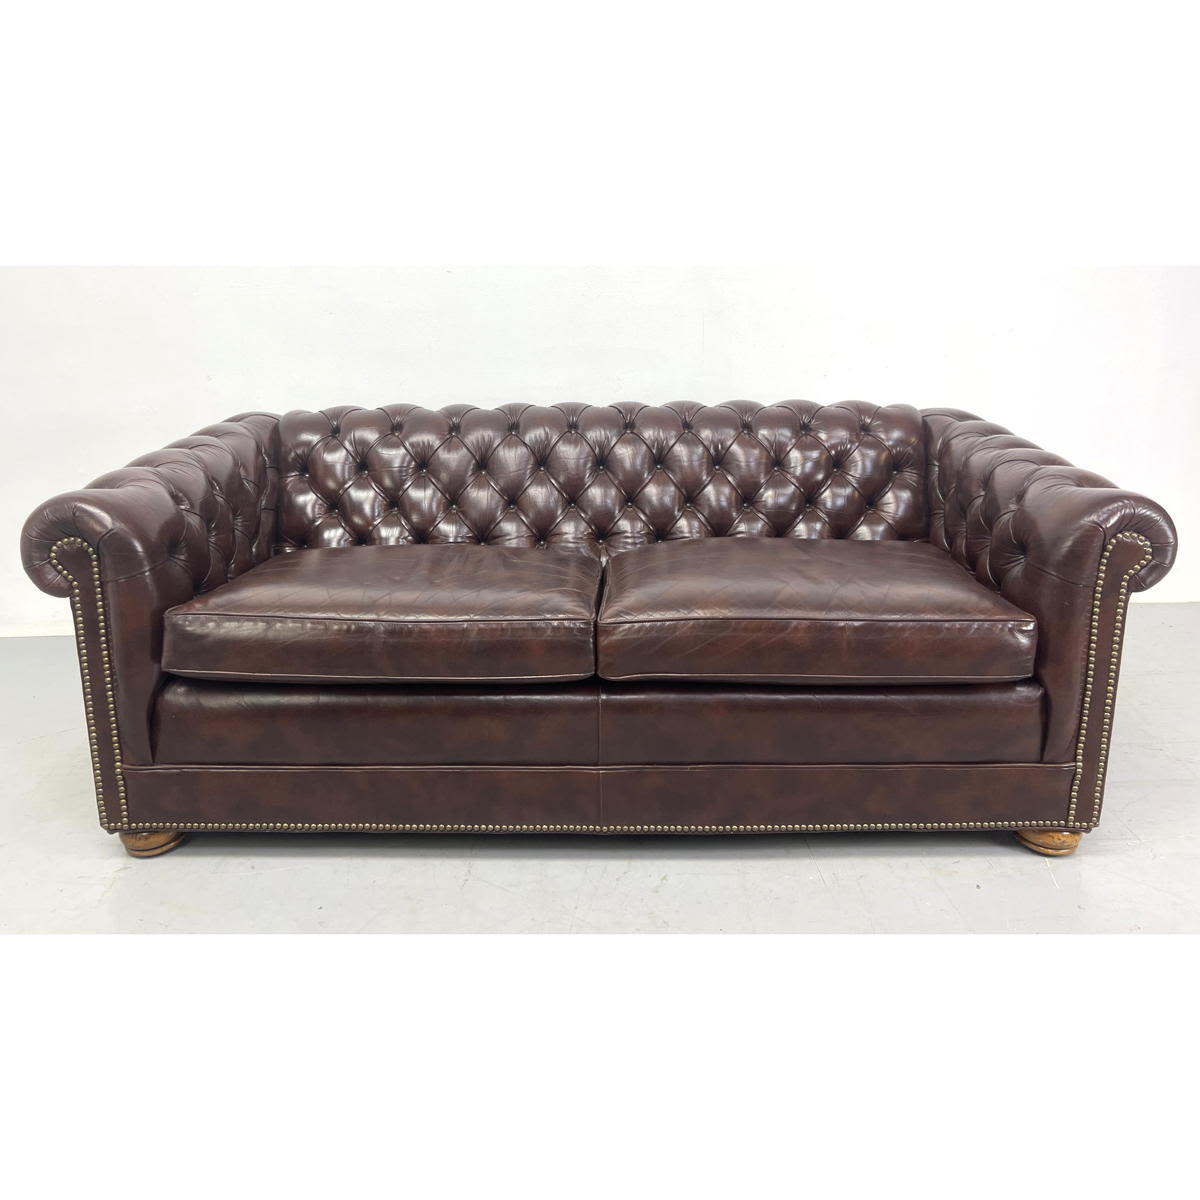 Chesterfield Tufted leather Sofa 3ad69e